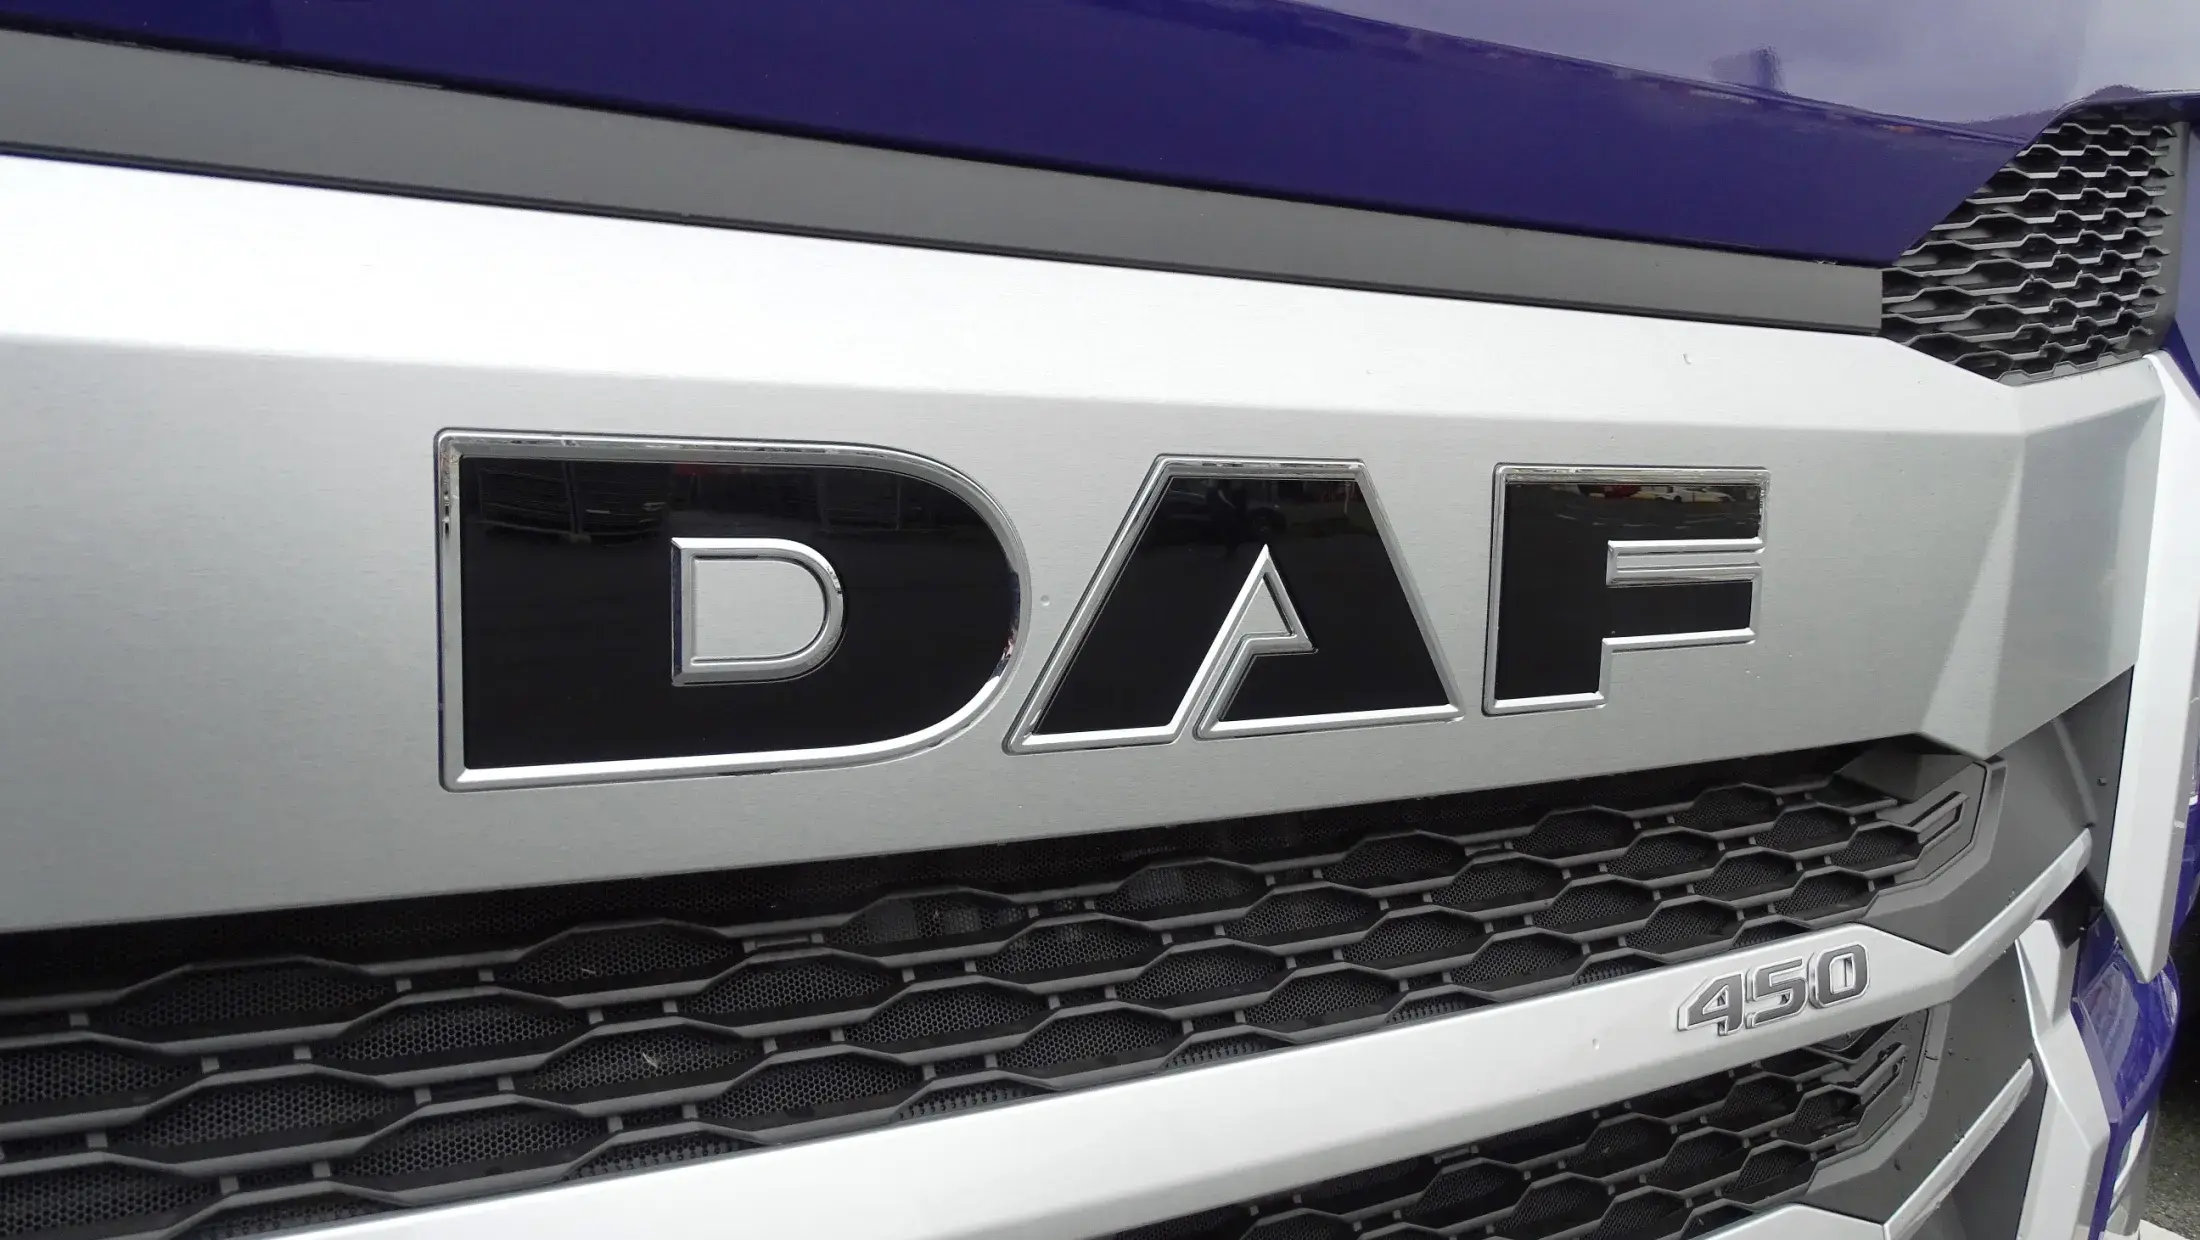 2x DAF XD 450 FT SHC - Floriway